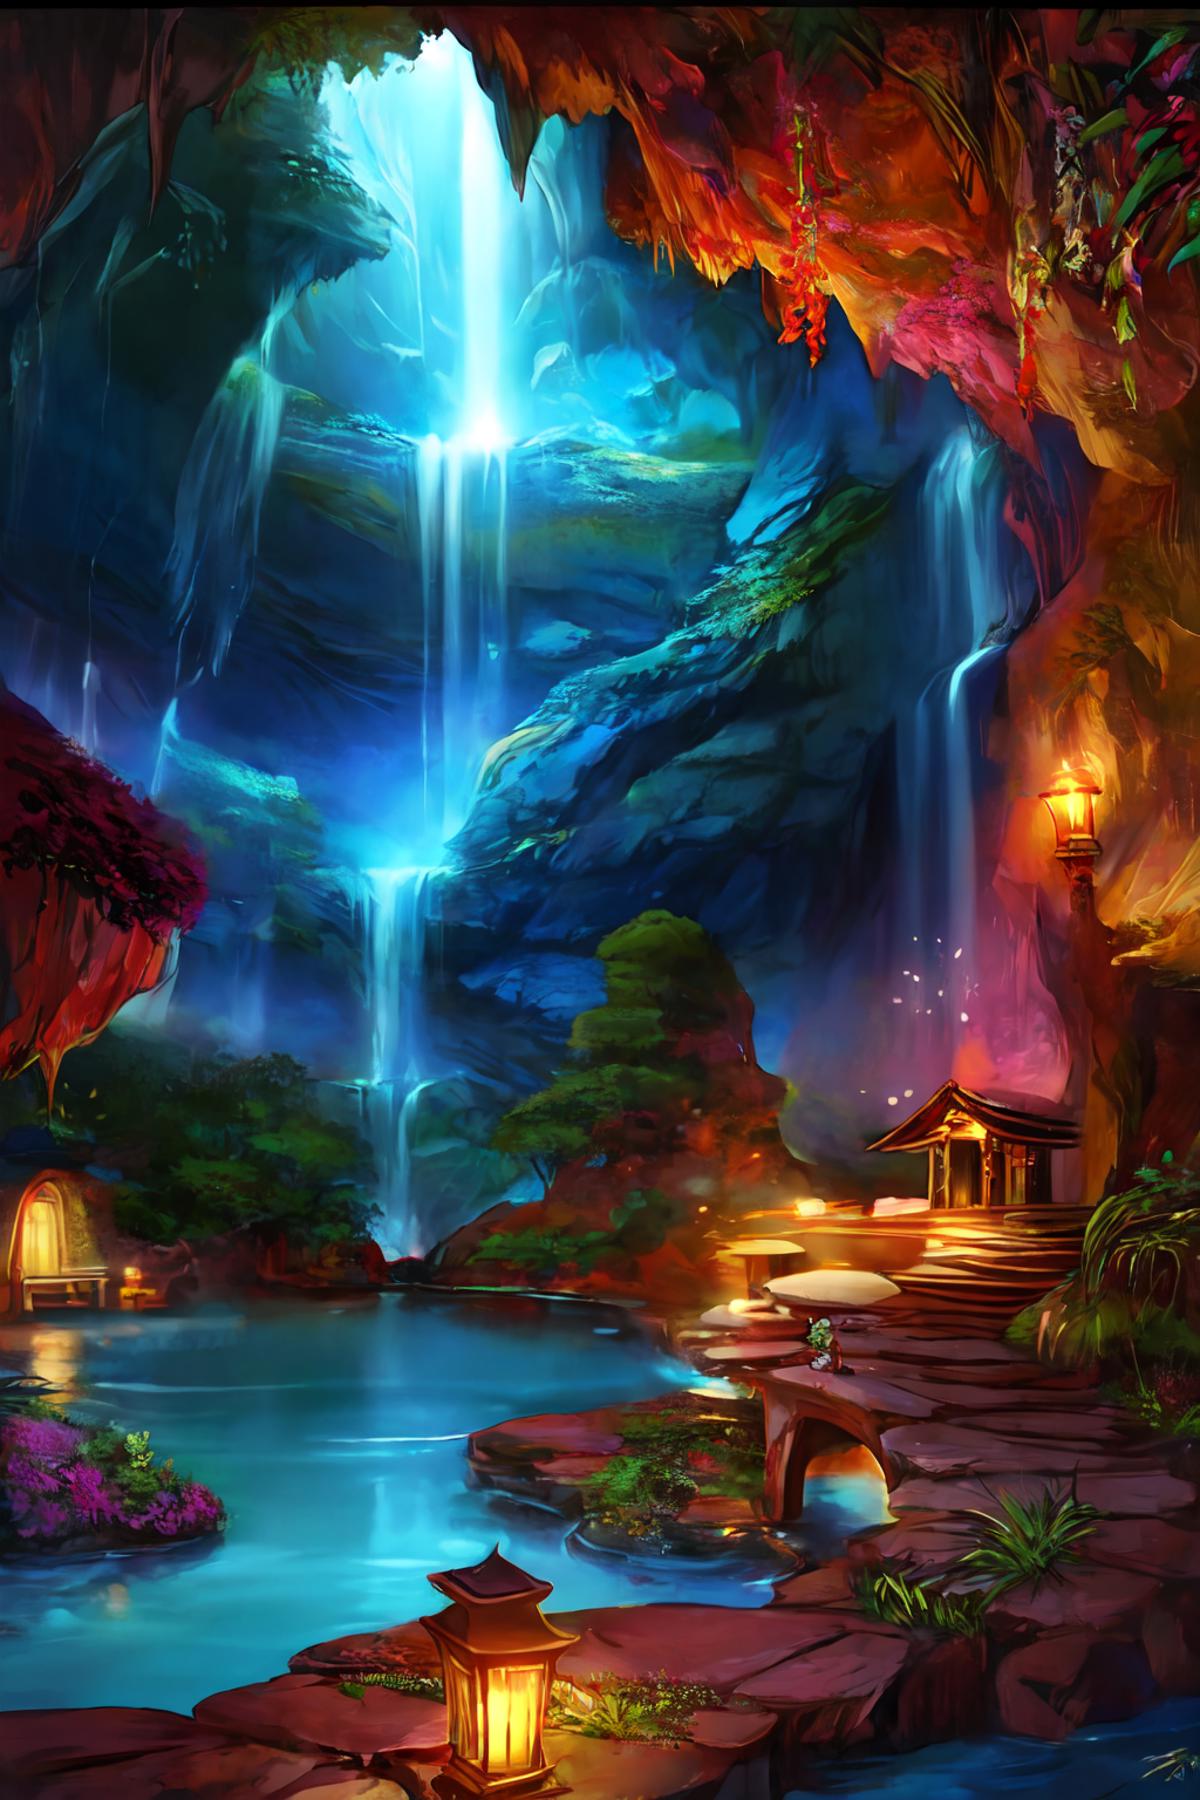 Fantasy Underground image by SecretEGGNOG